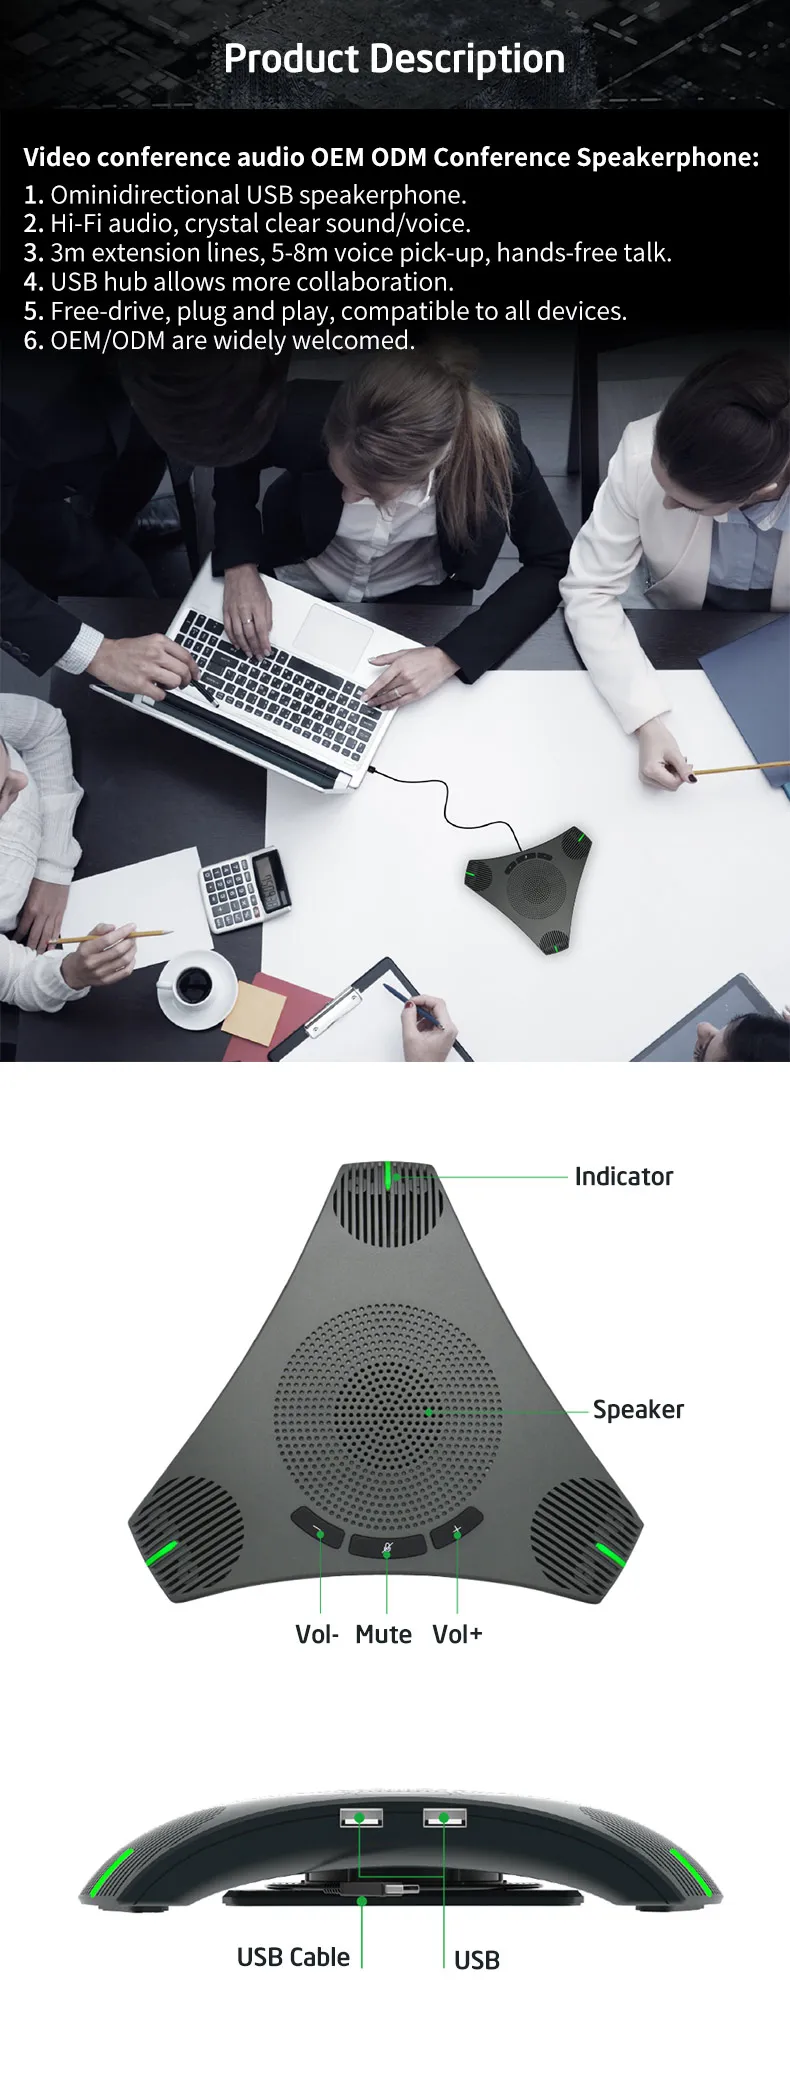 New Model of usb Speakerphone for Conference Speakerphone